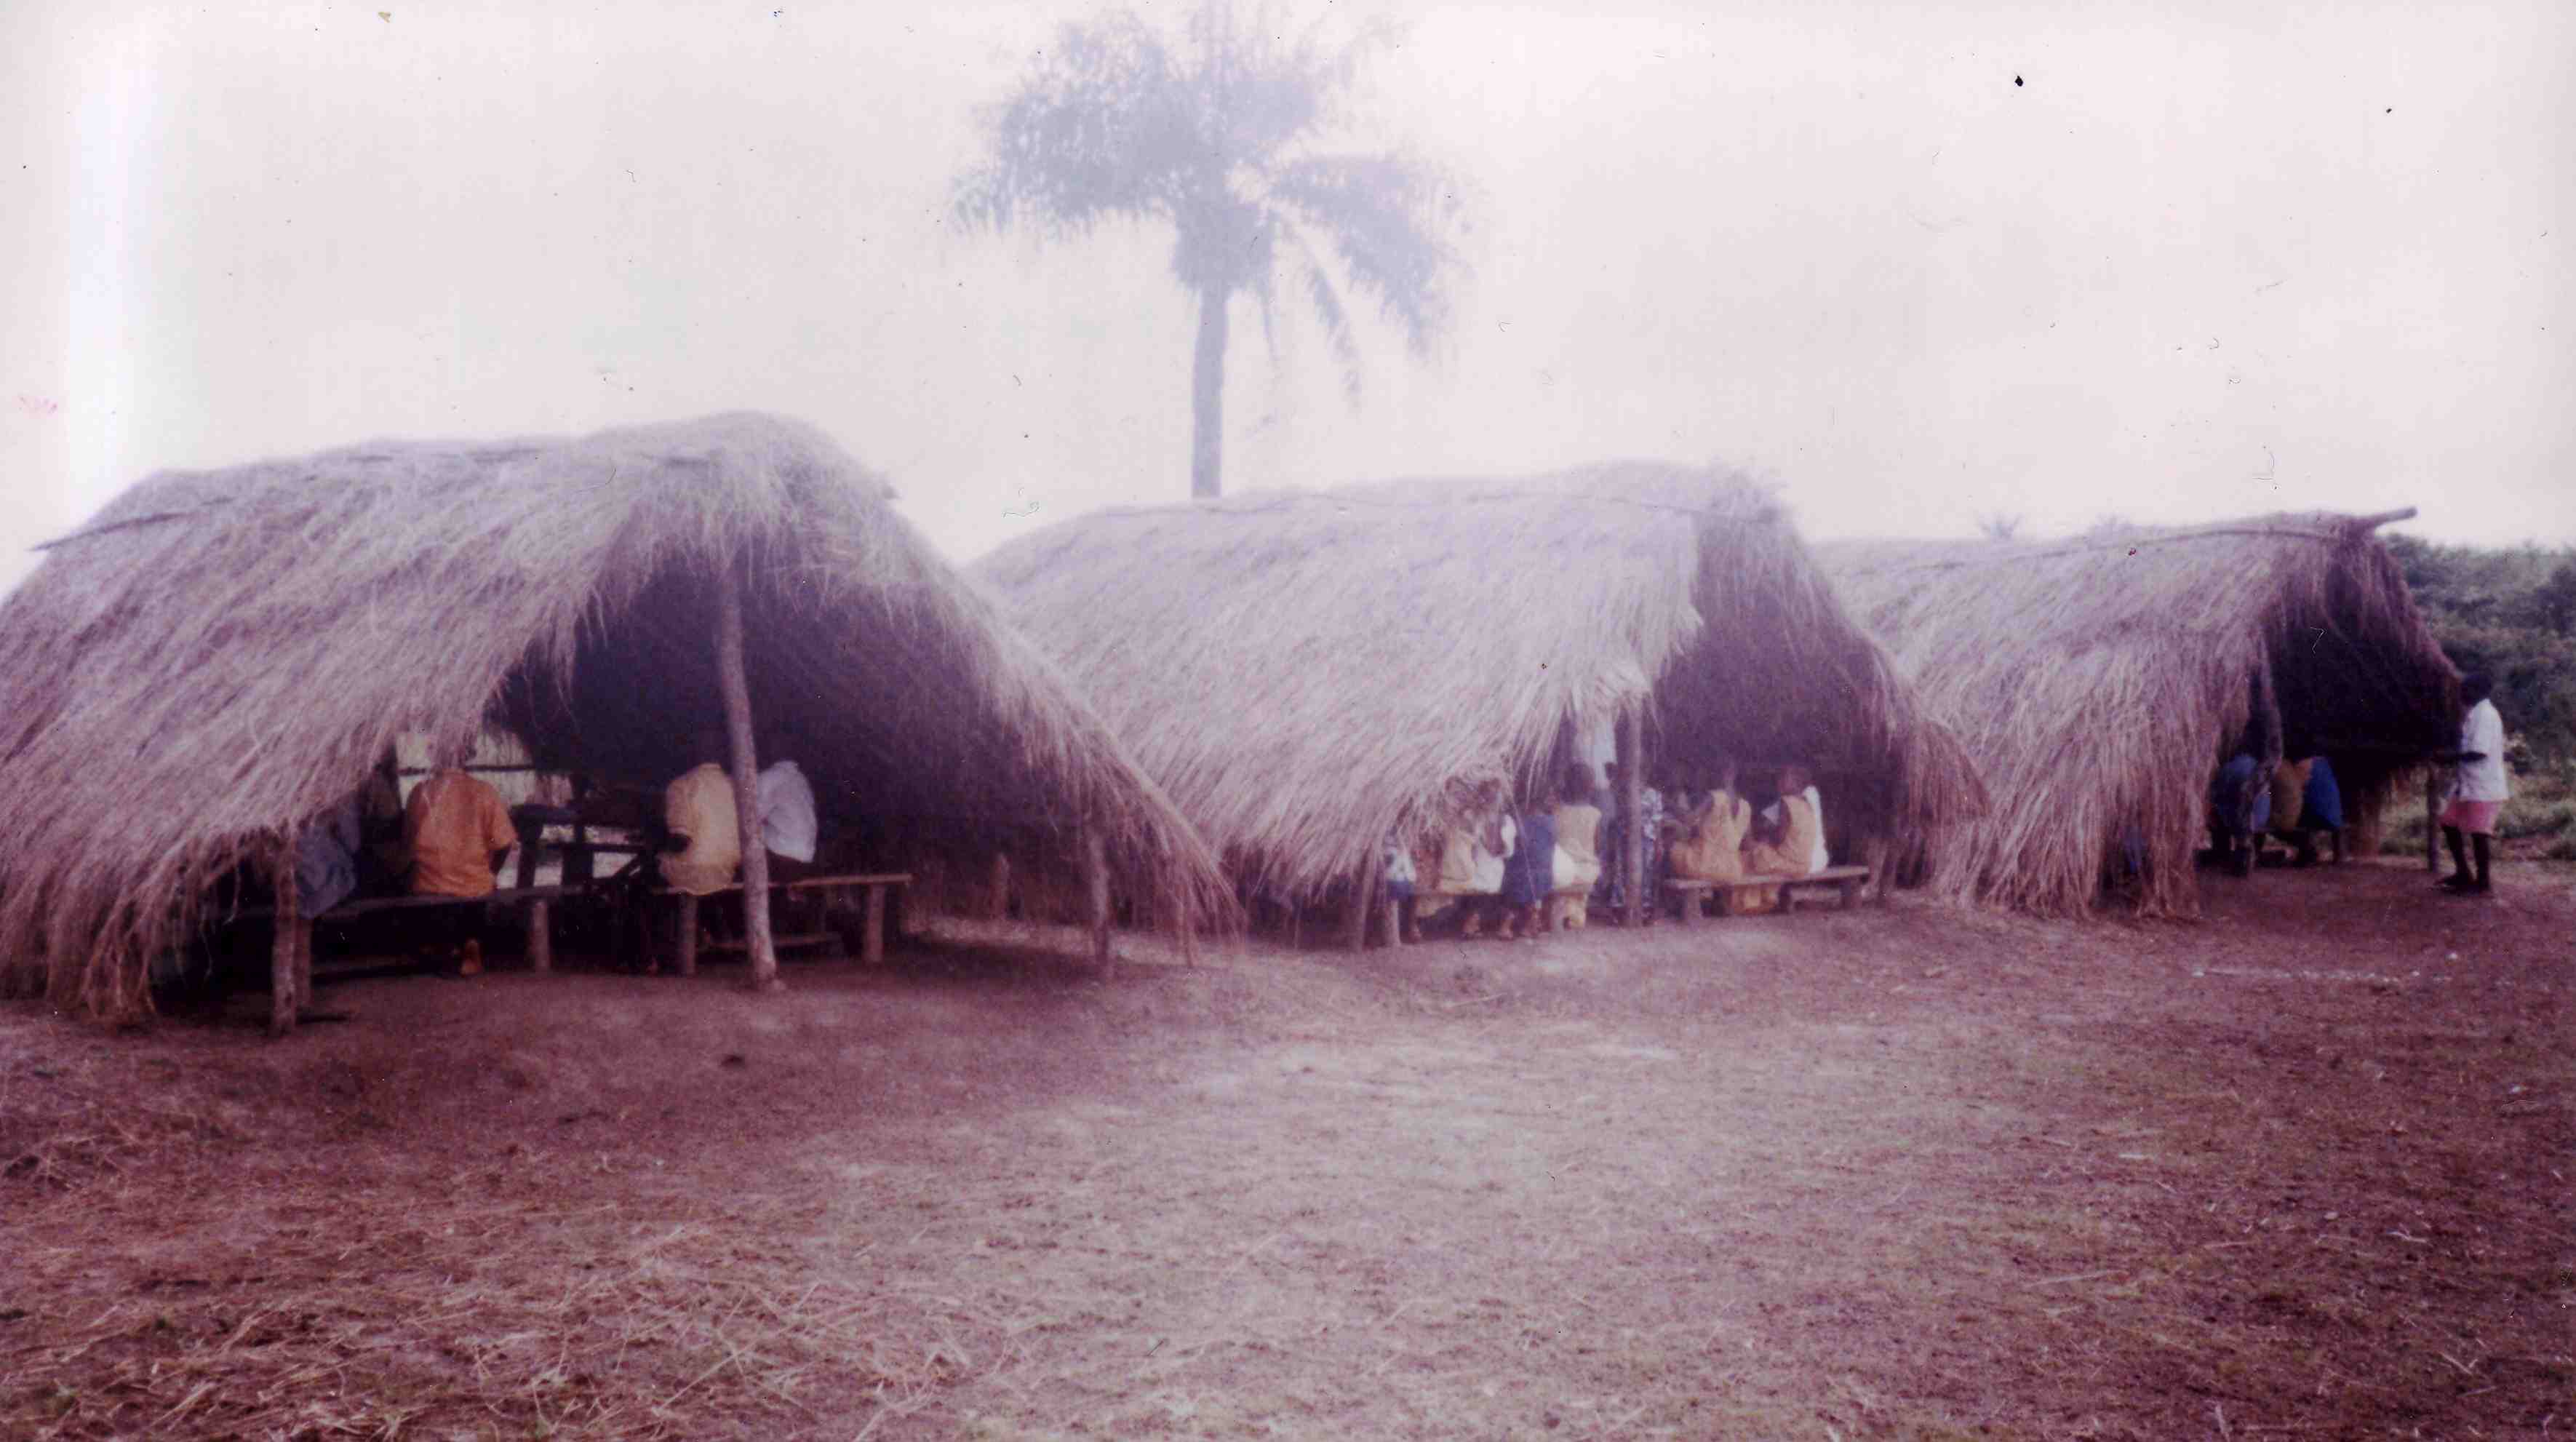 3 hut school